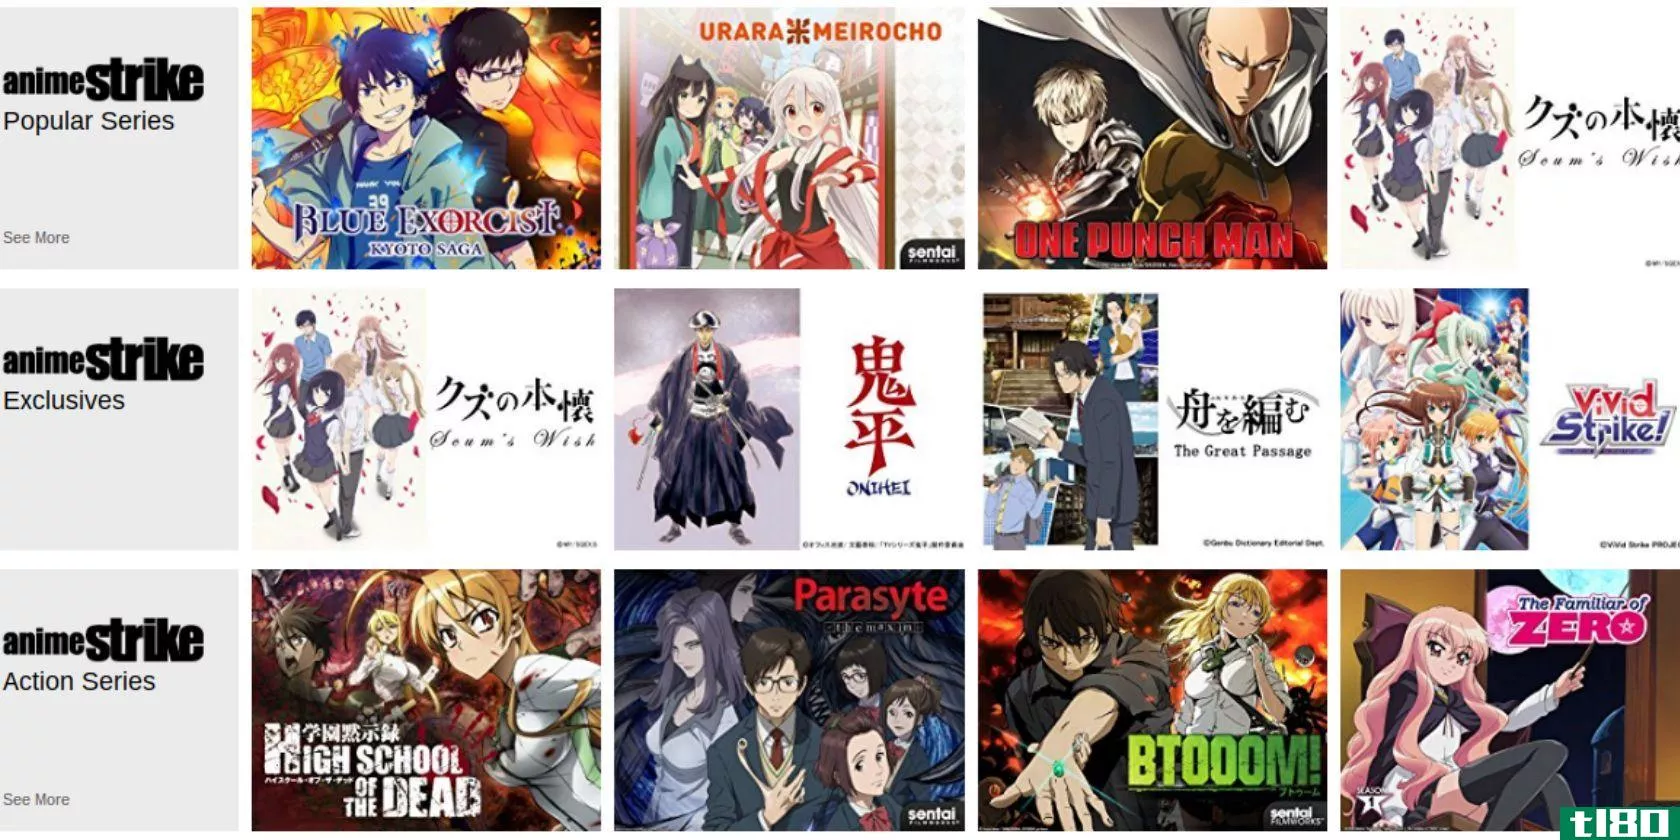 anime-strike-amazon-prime-channels